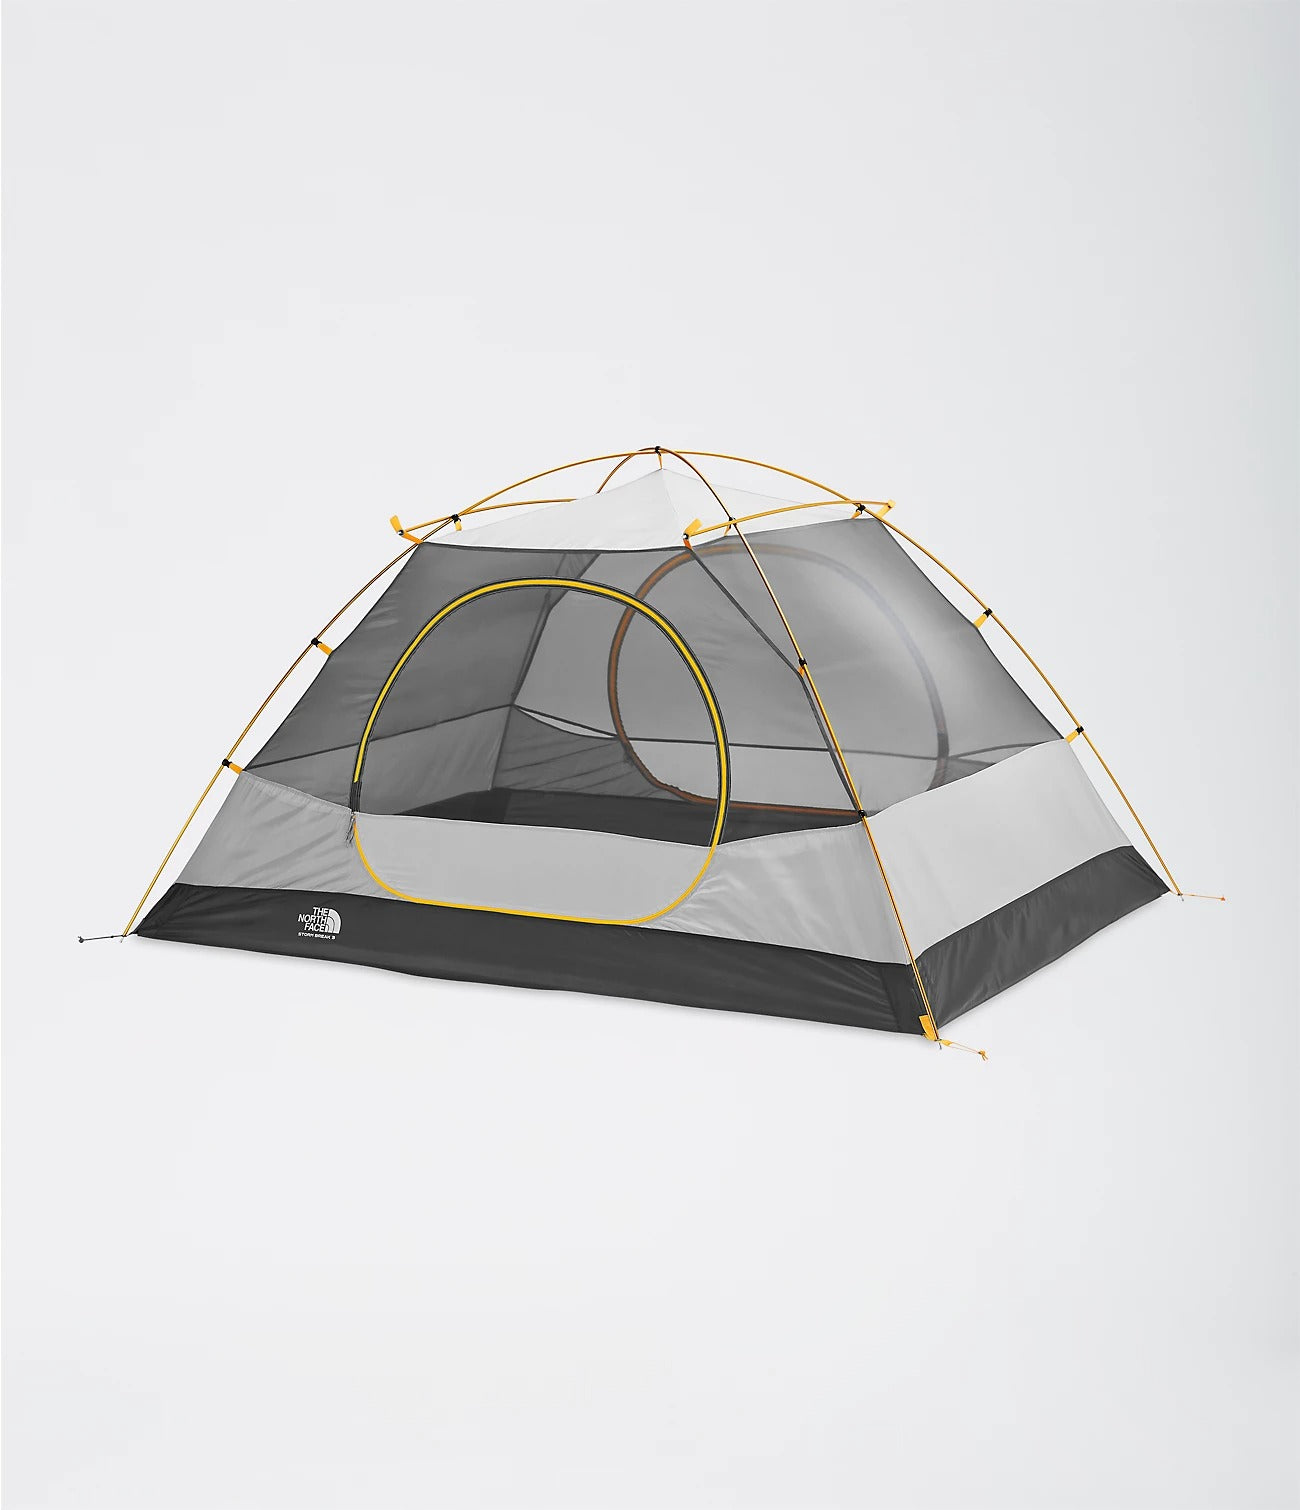 The North Face Stormbreak 3-Person Tent